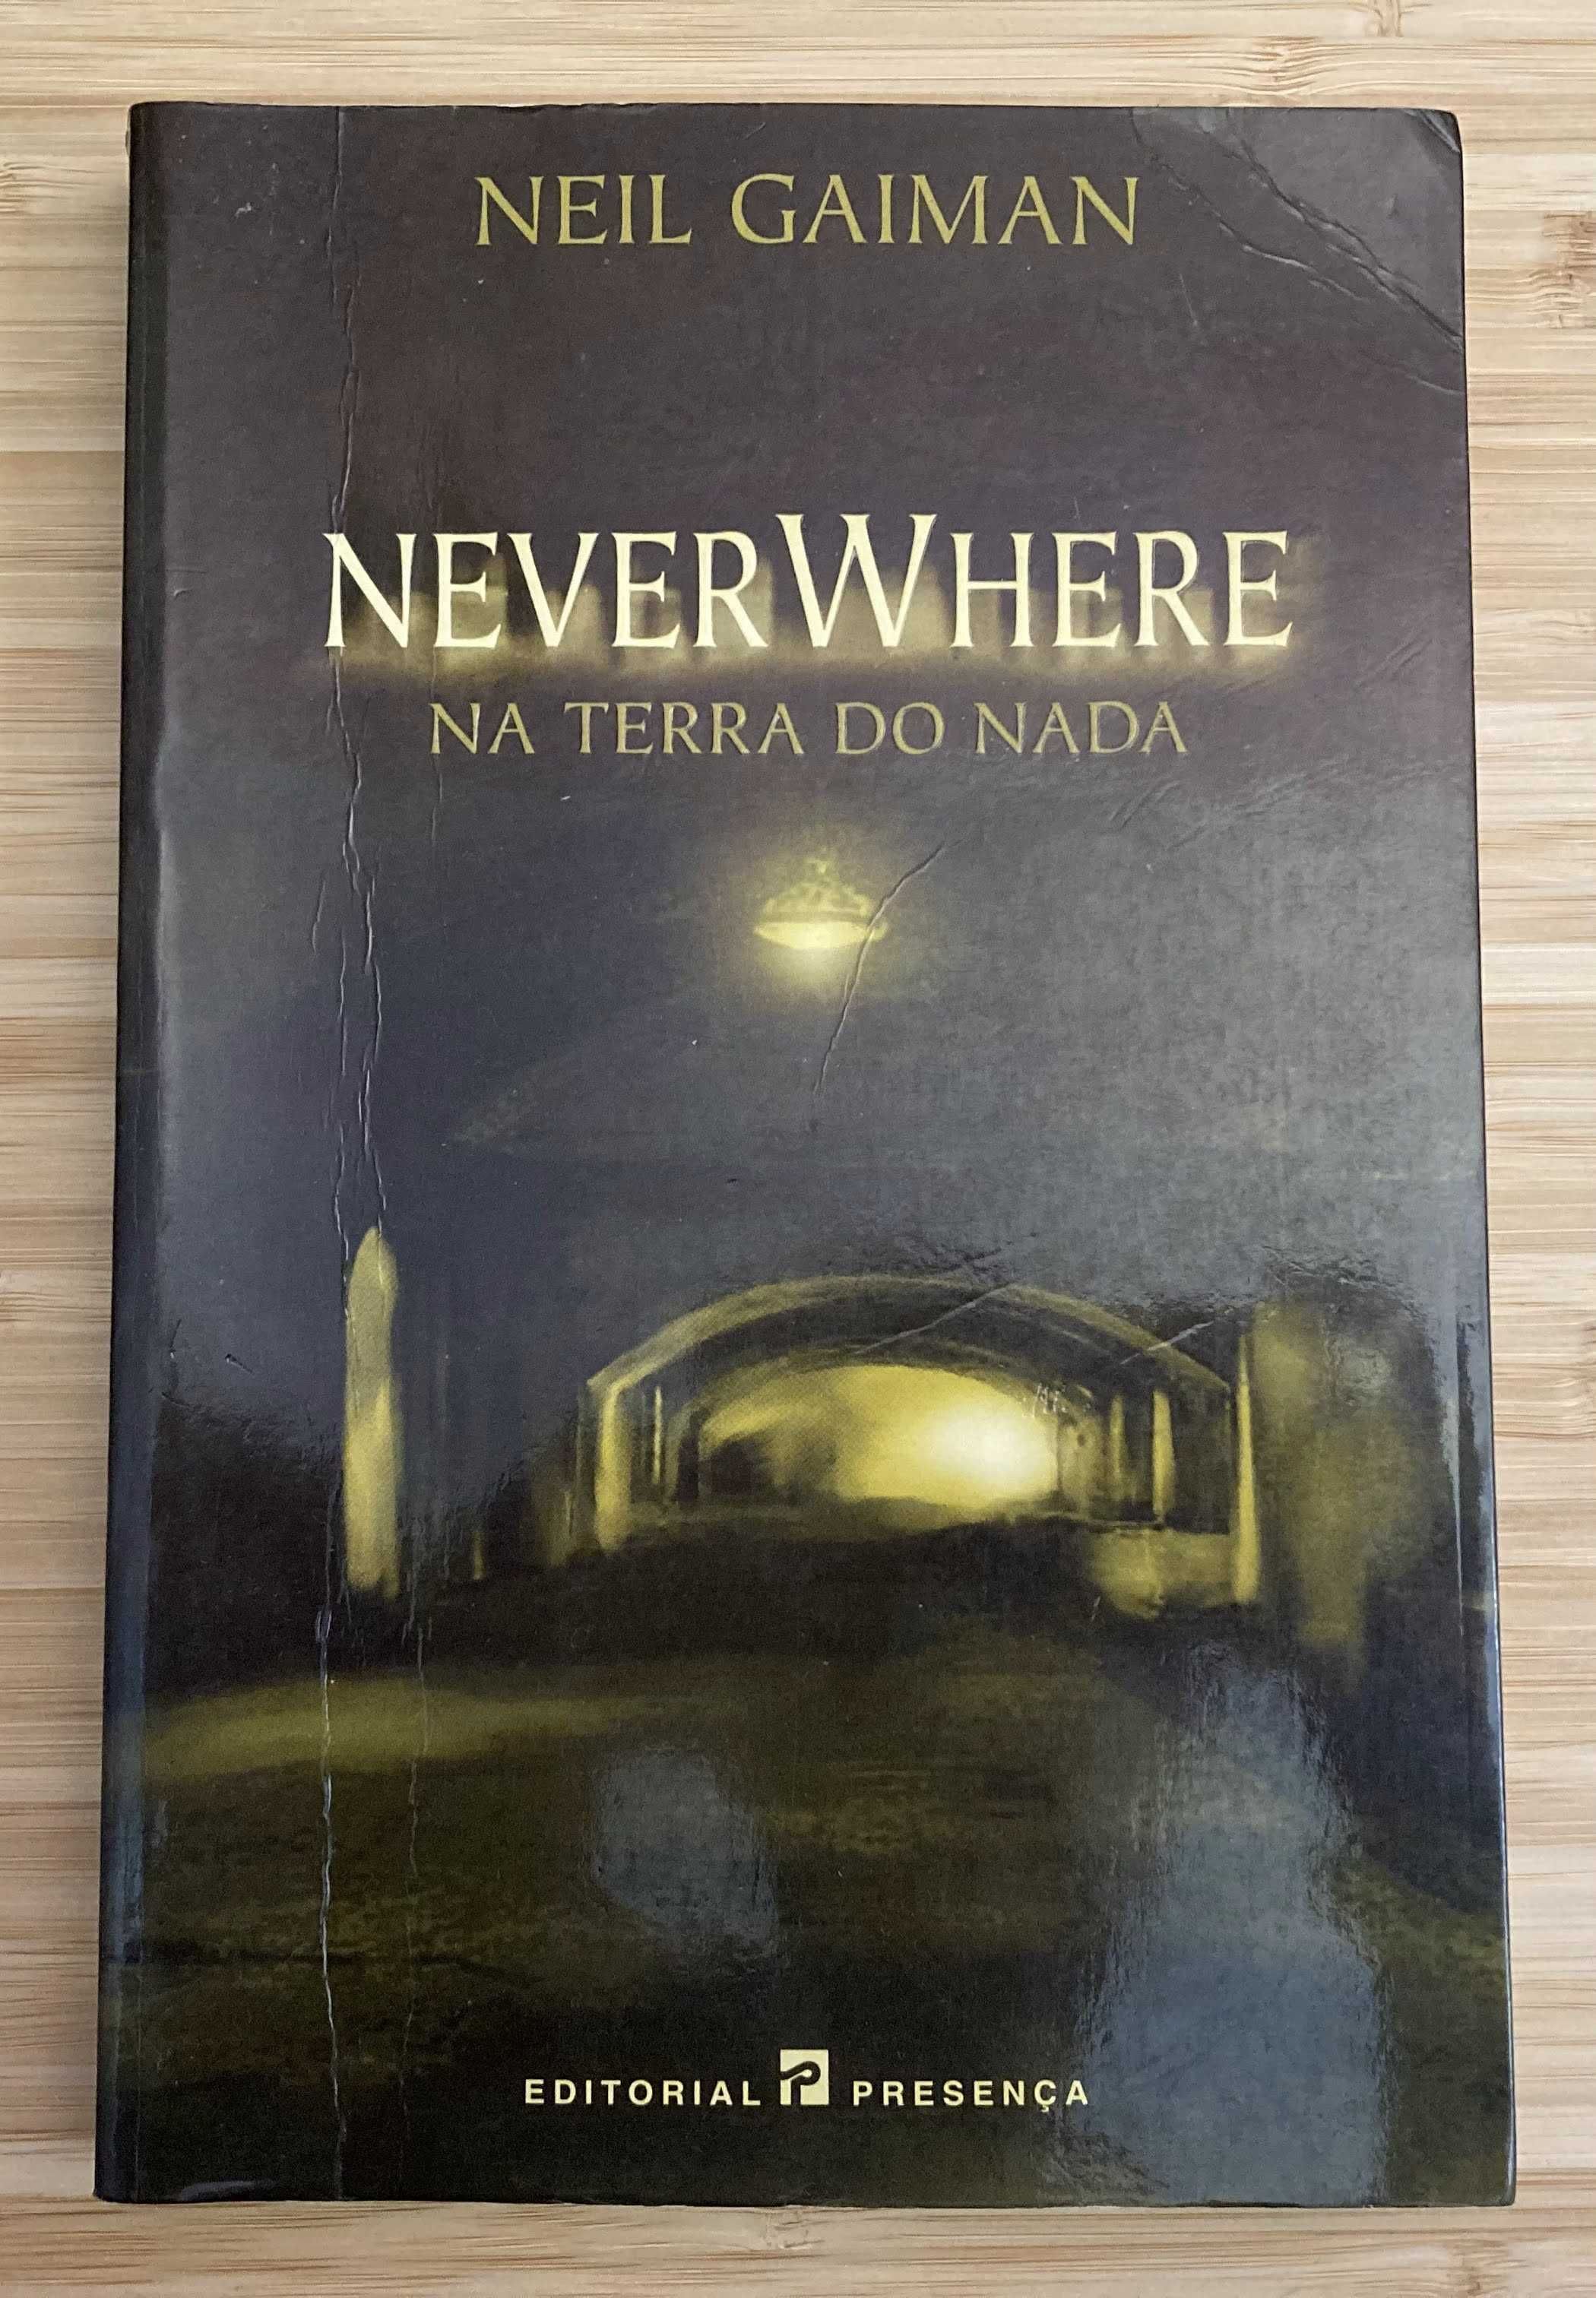 Livro "NeverWhere - Na Terra do Nada" - 8€